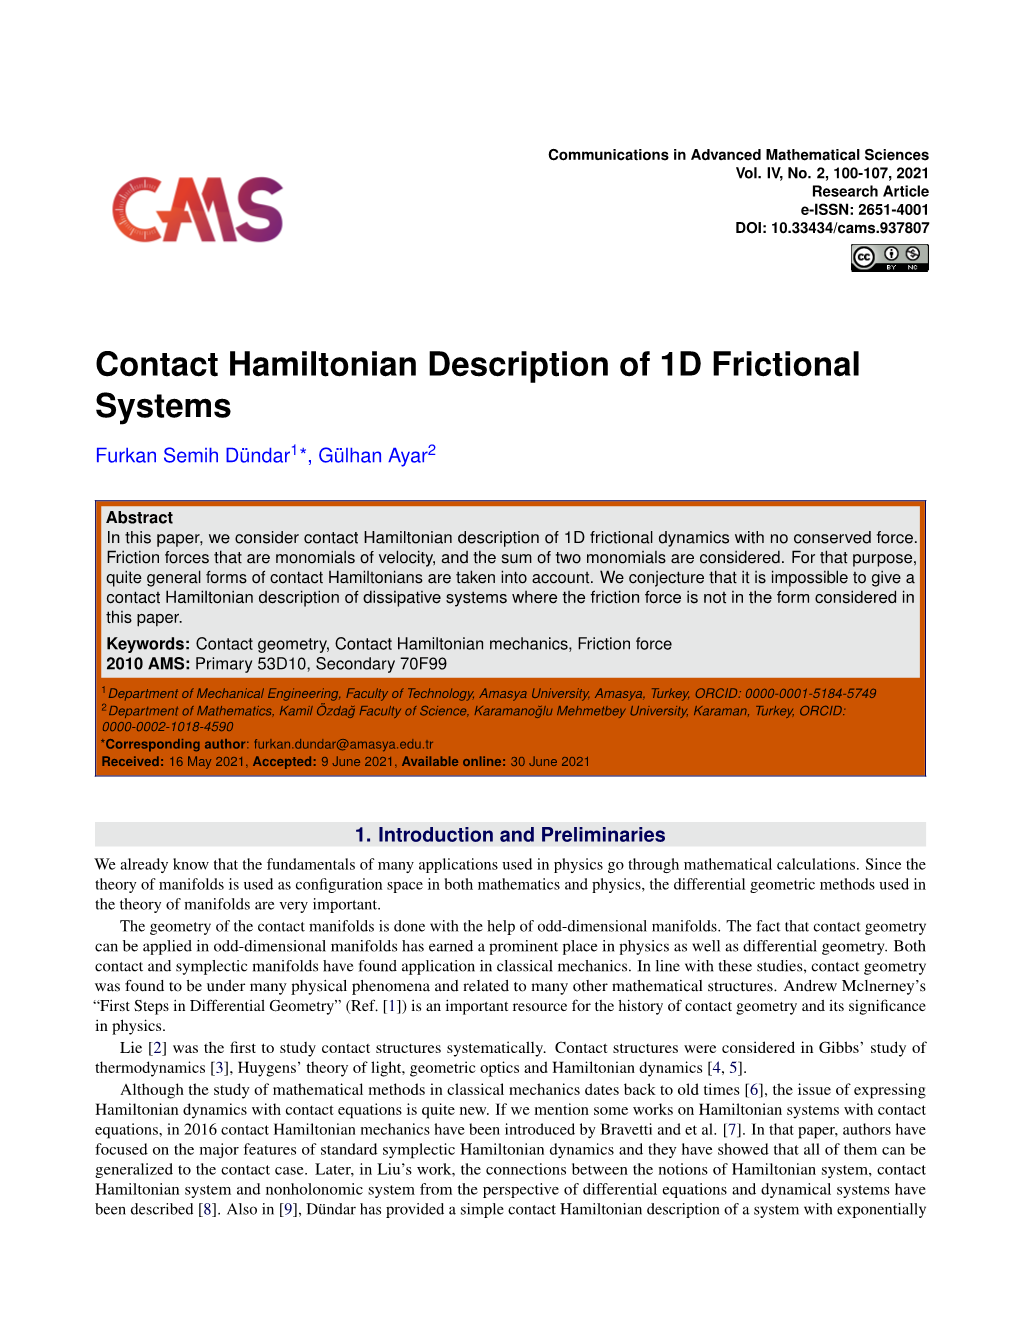 Contact Hamiltonian Description of 1D Frictional Systems